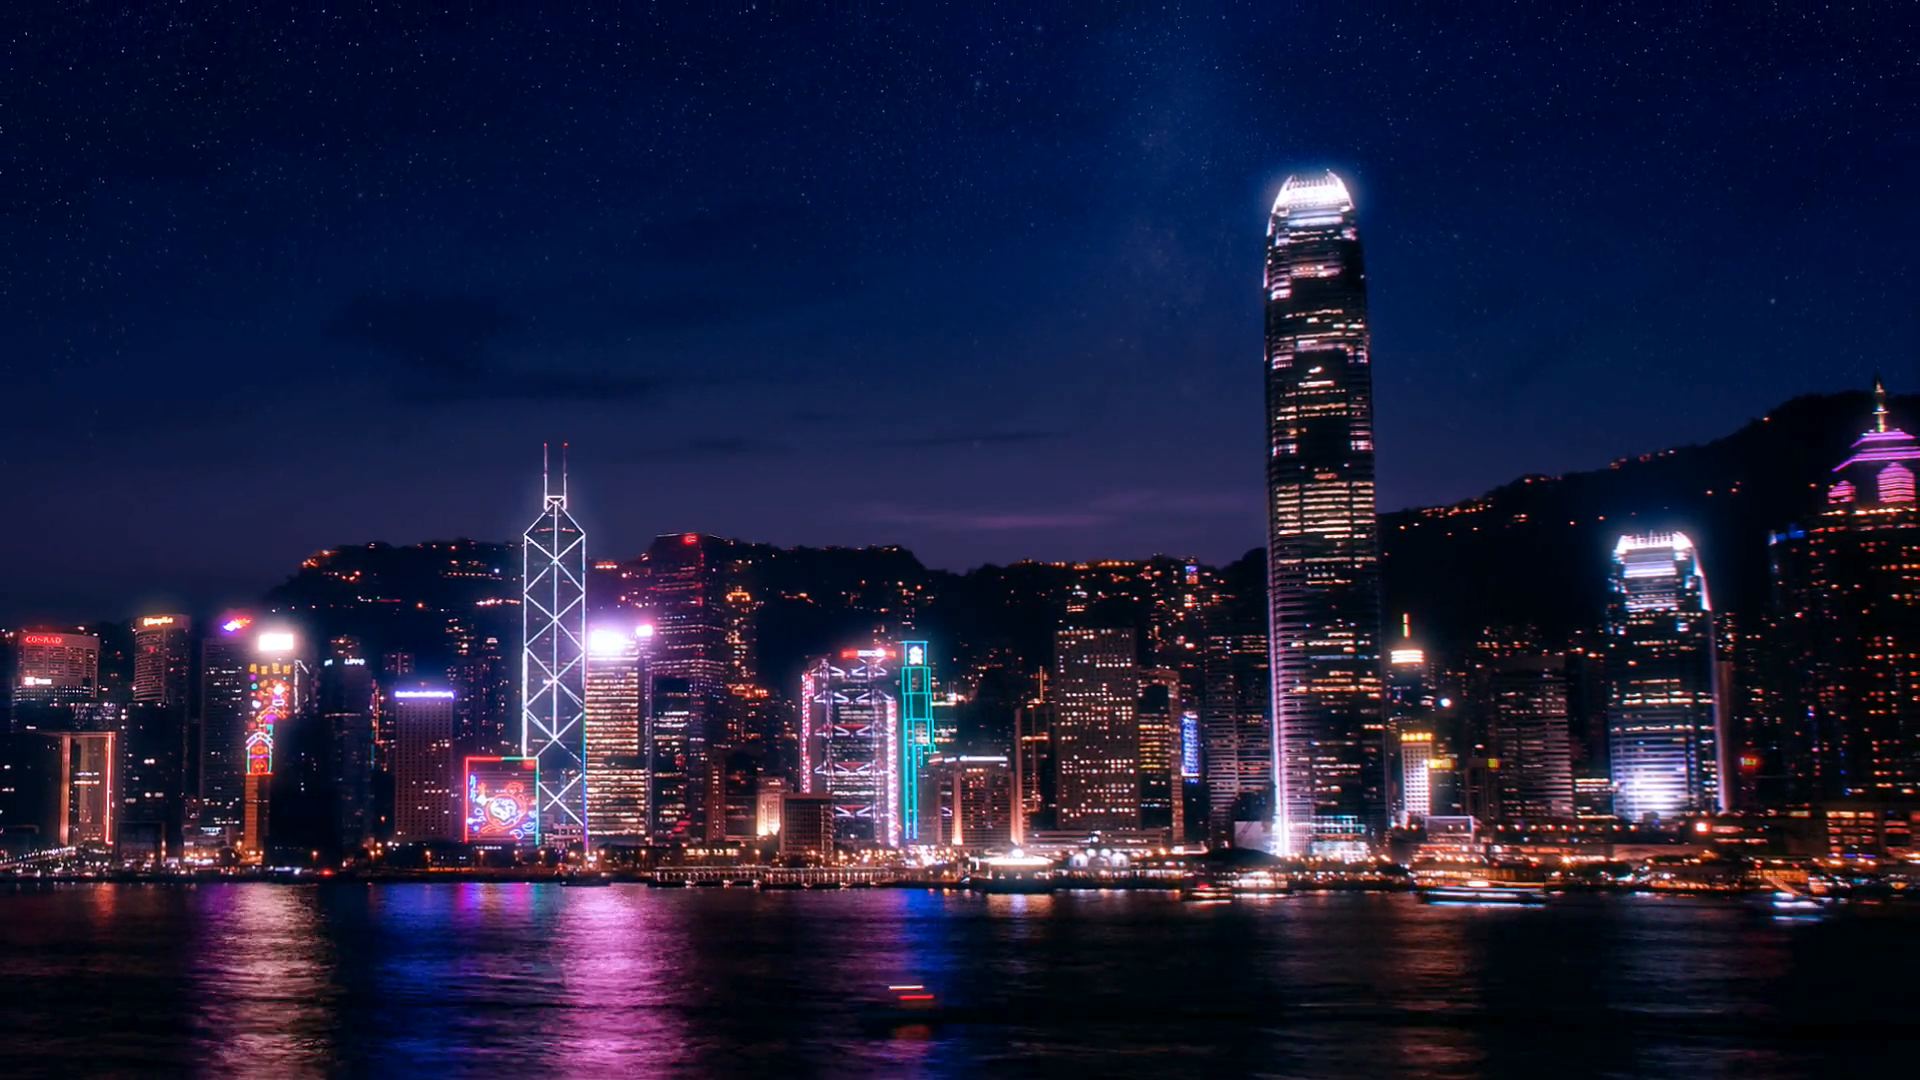 The Hong Kong skyline lights up the night.